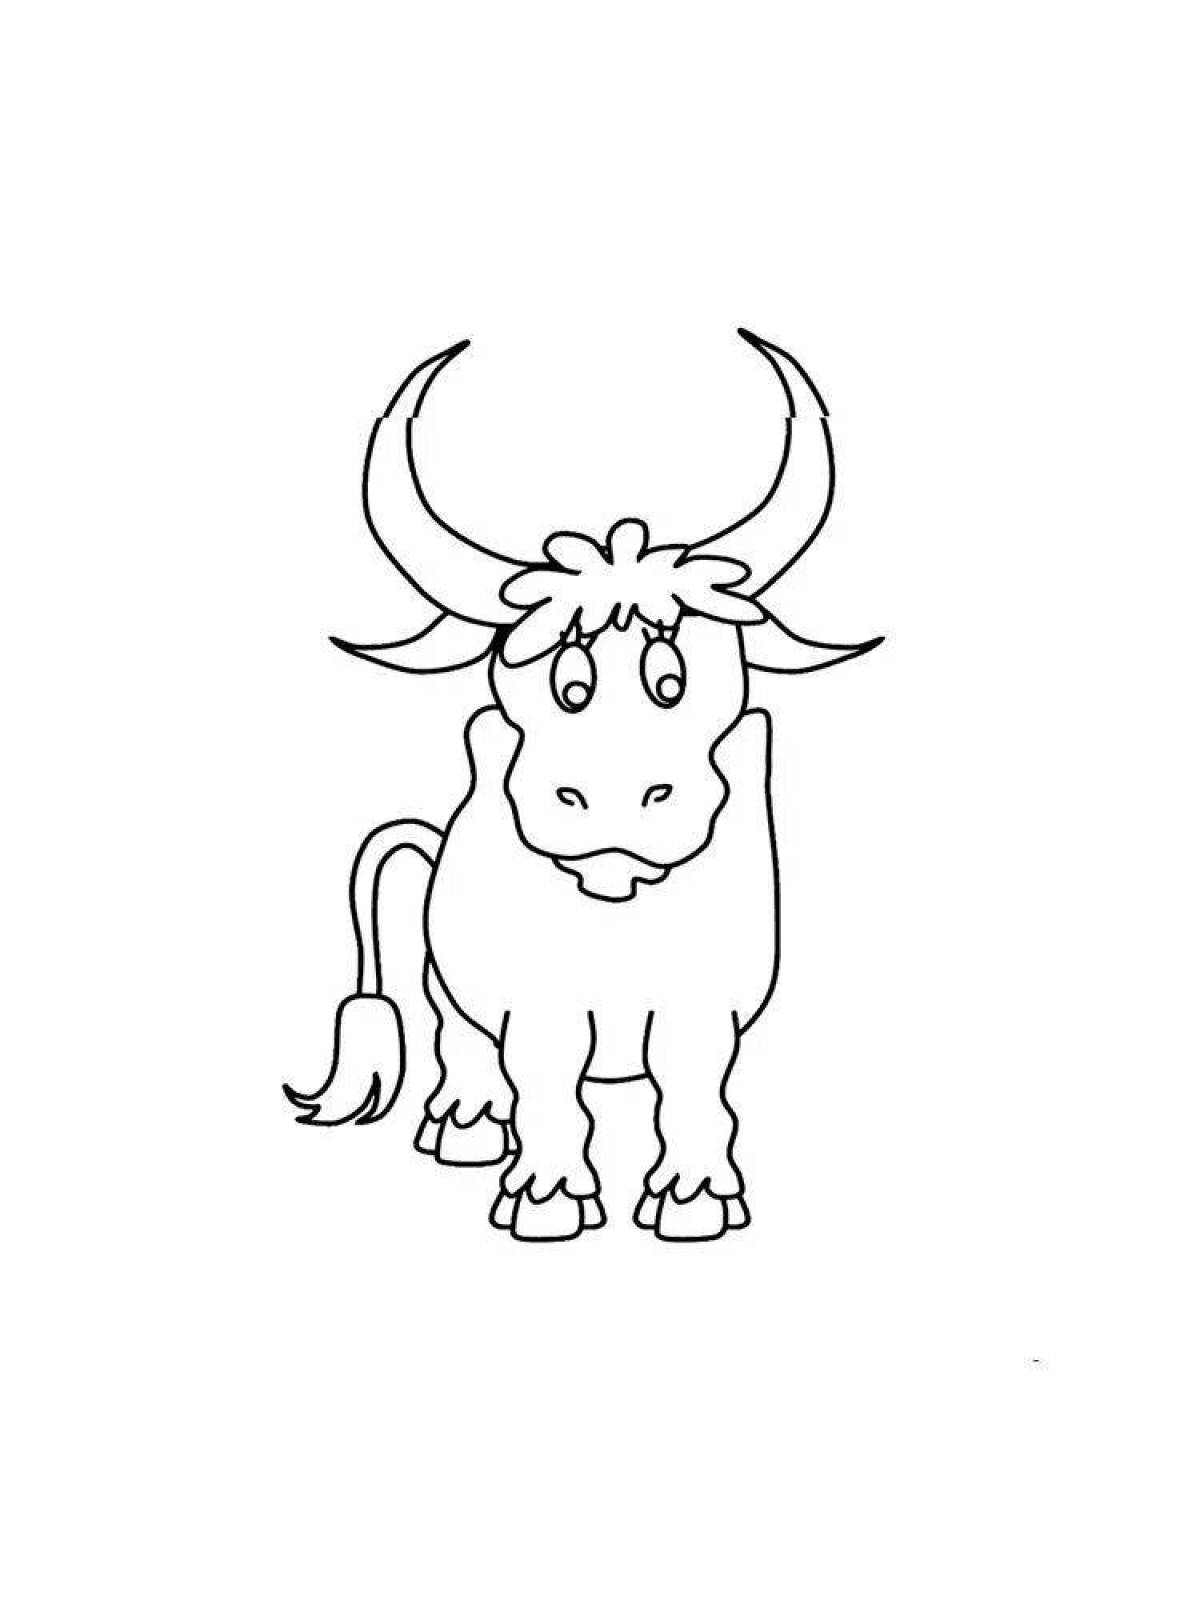 Coloring live bull for children